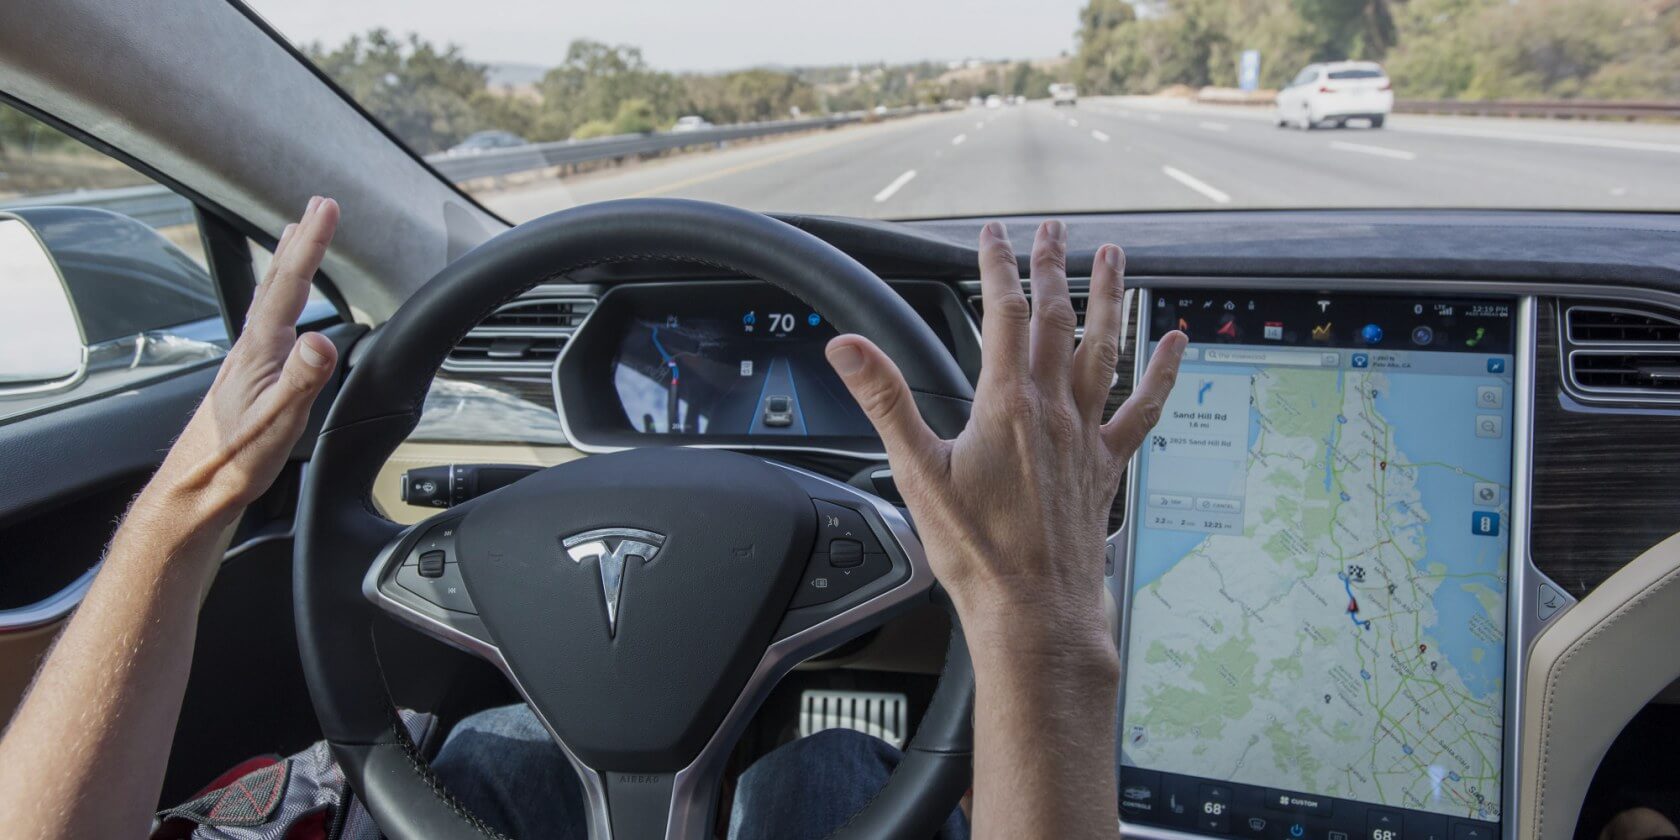 Autopilot exploit lets researchers trick Tesla vehicle into driving toward oncoming traffic lane